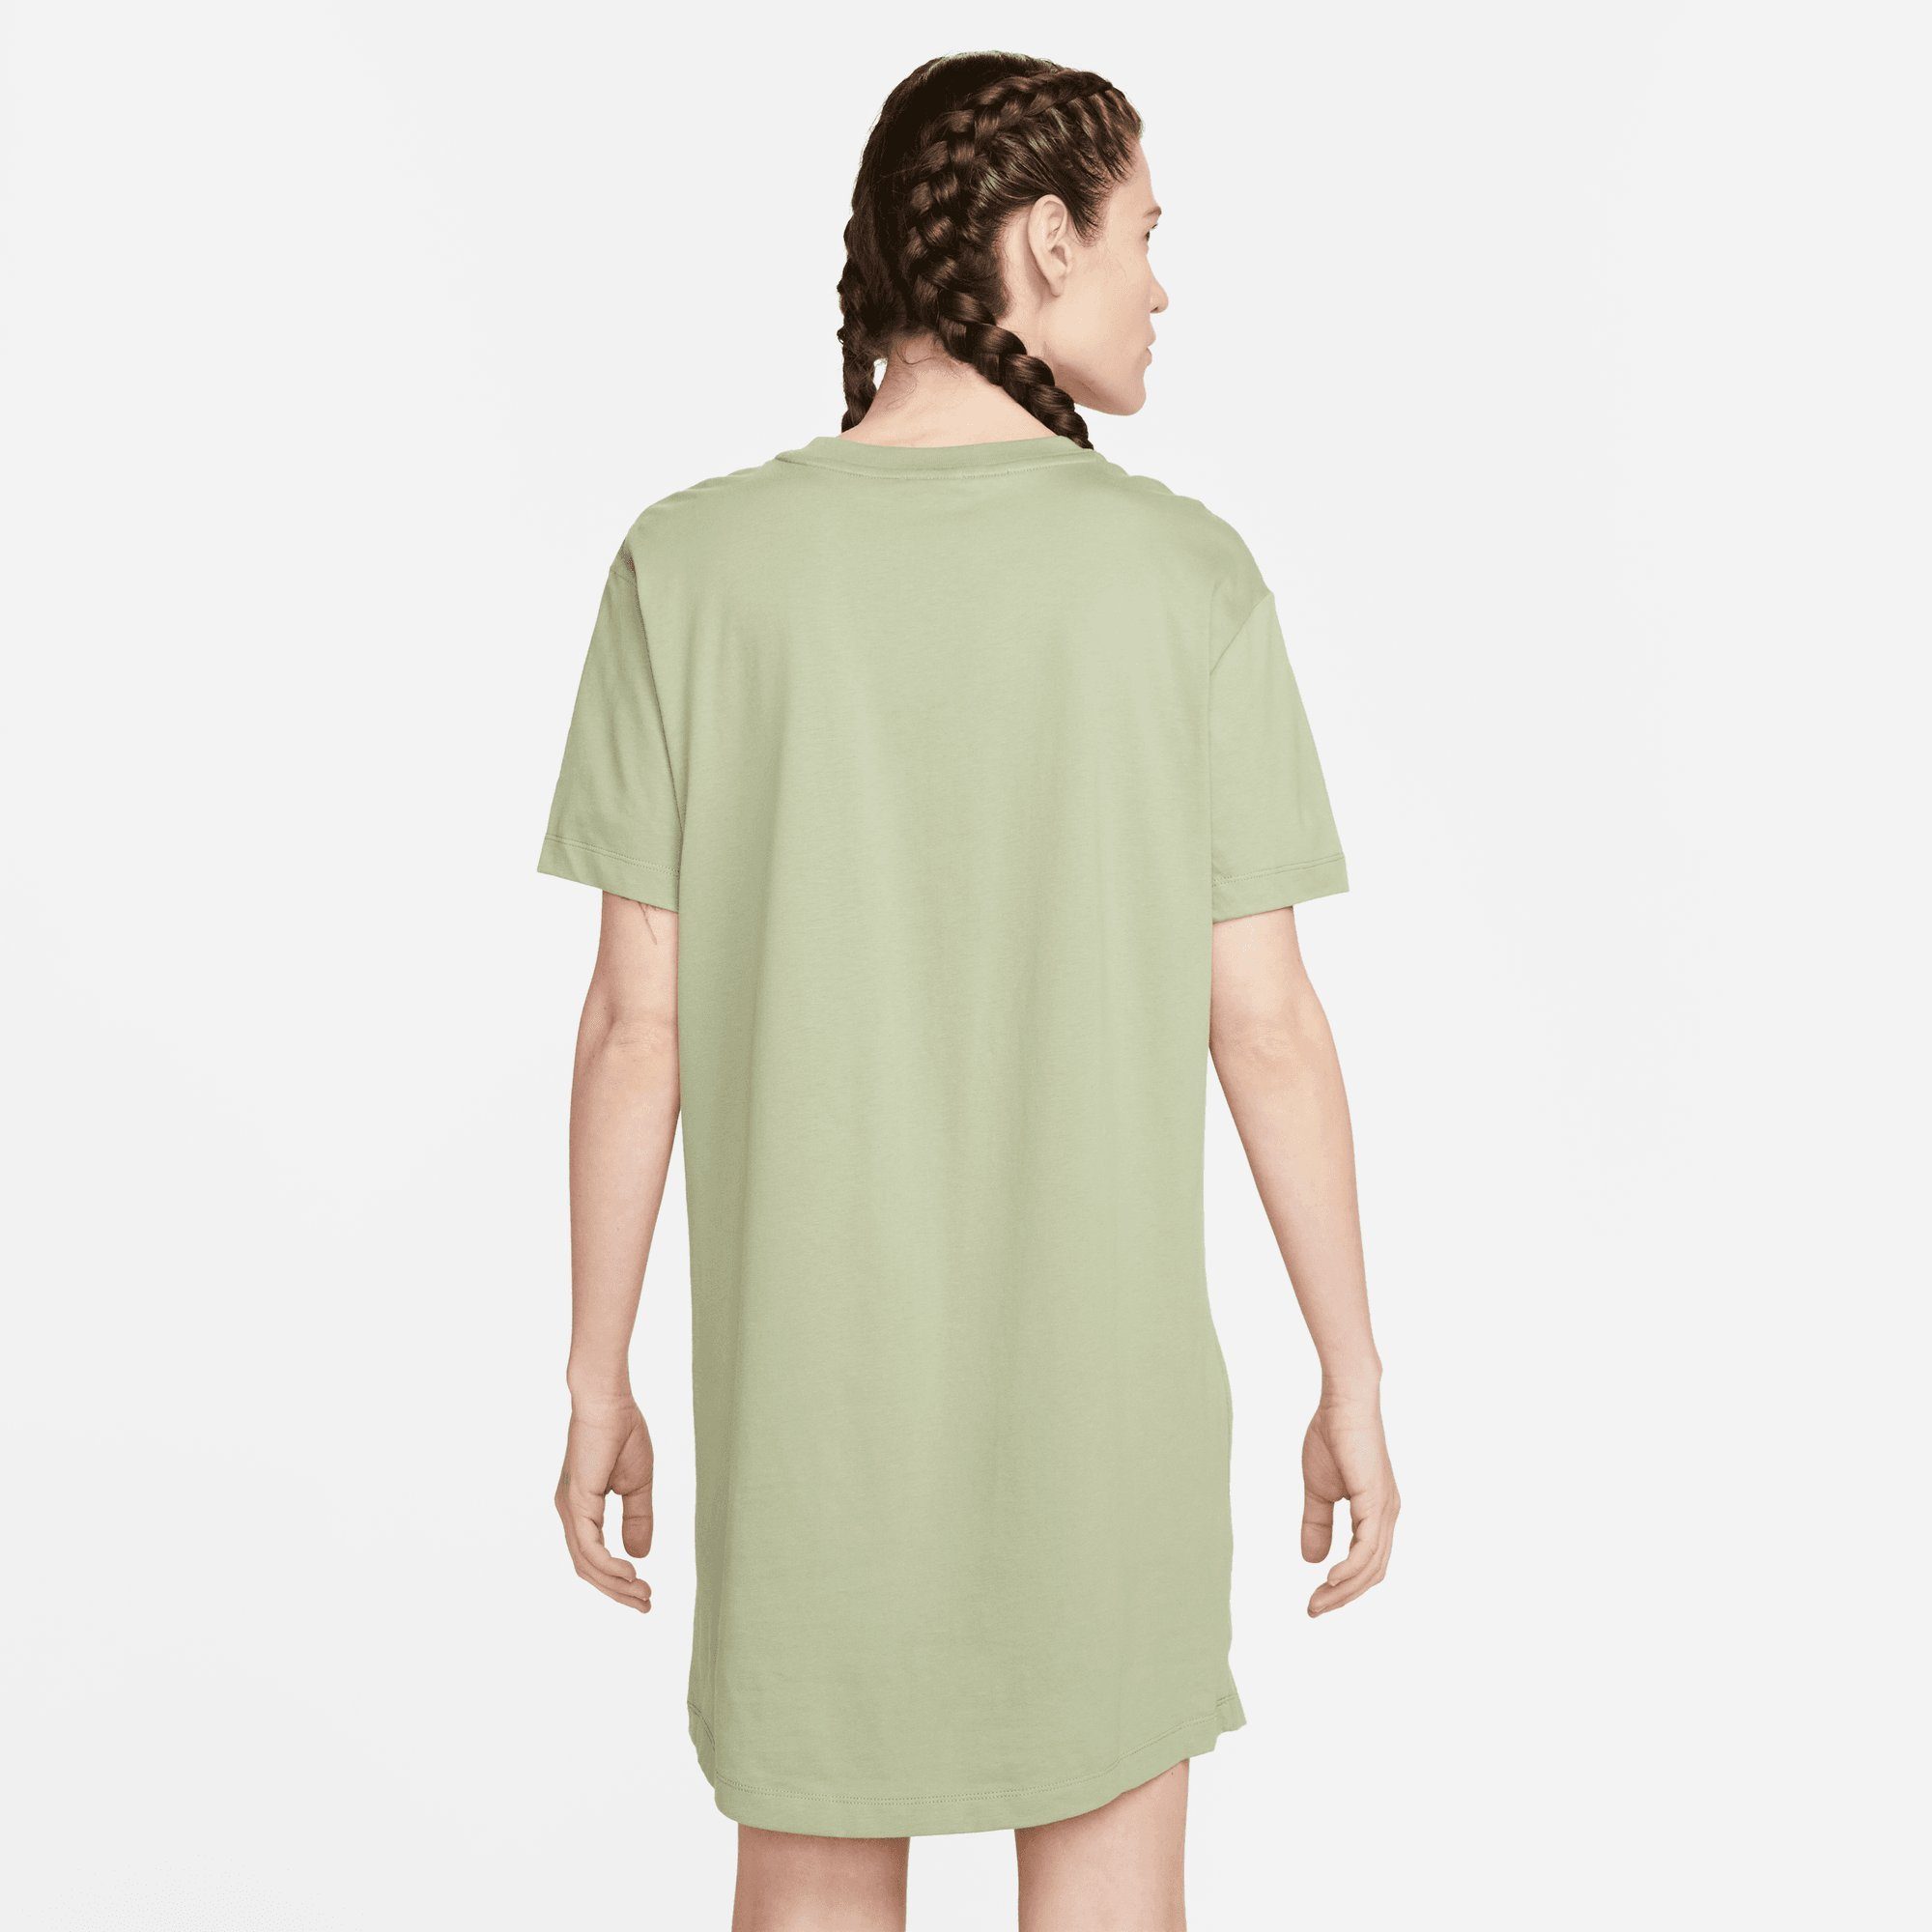 DRESS Sportswear GREEN/BLACK Nike SHORT-SLEEVE Sommerkleid ESSENTIAL OIL WOMEN'S